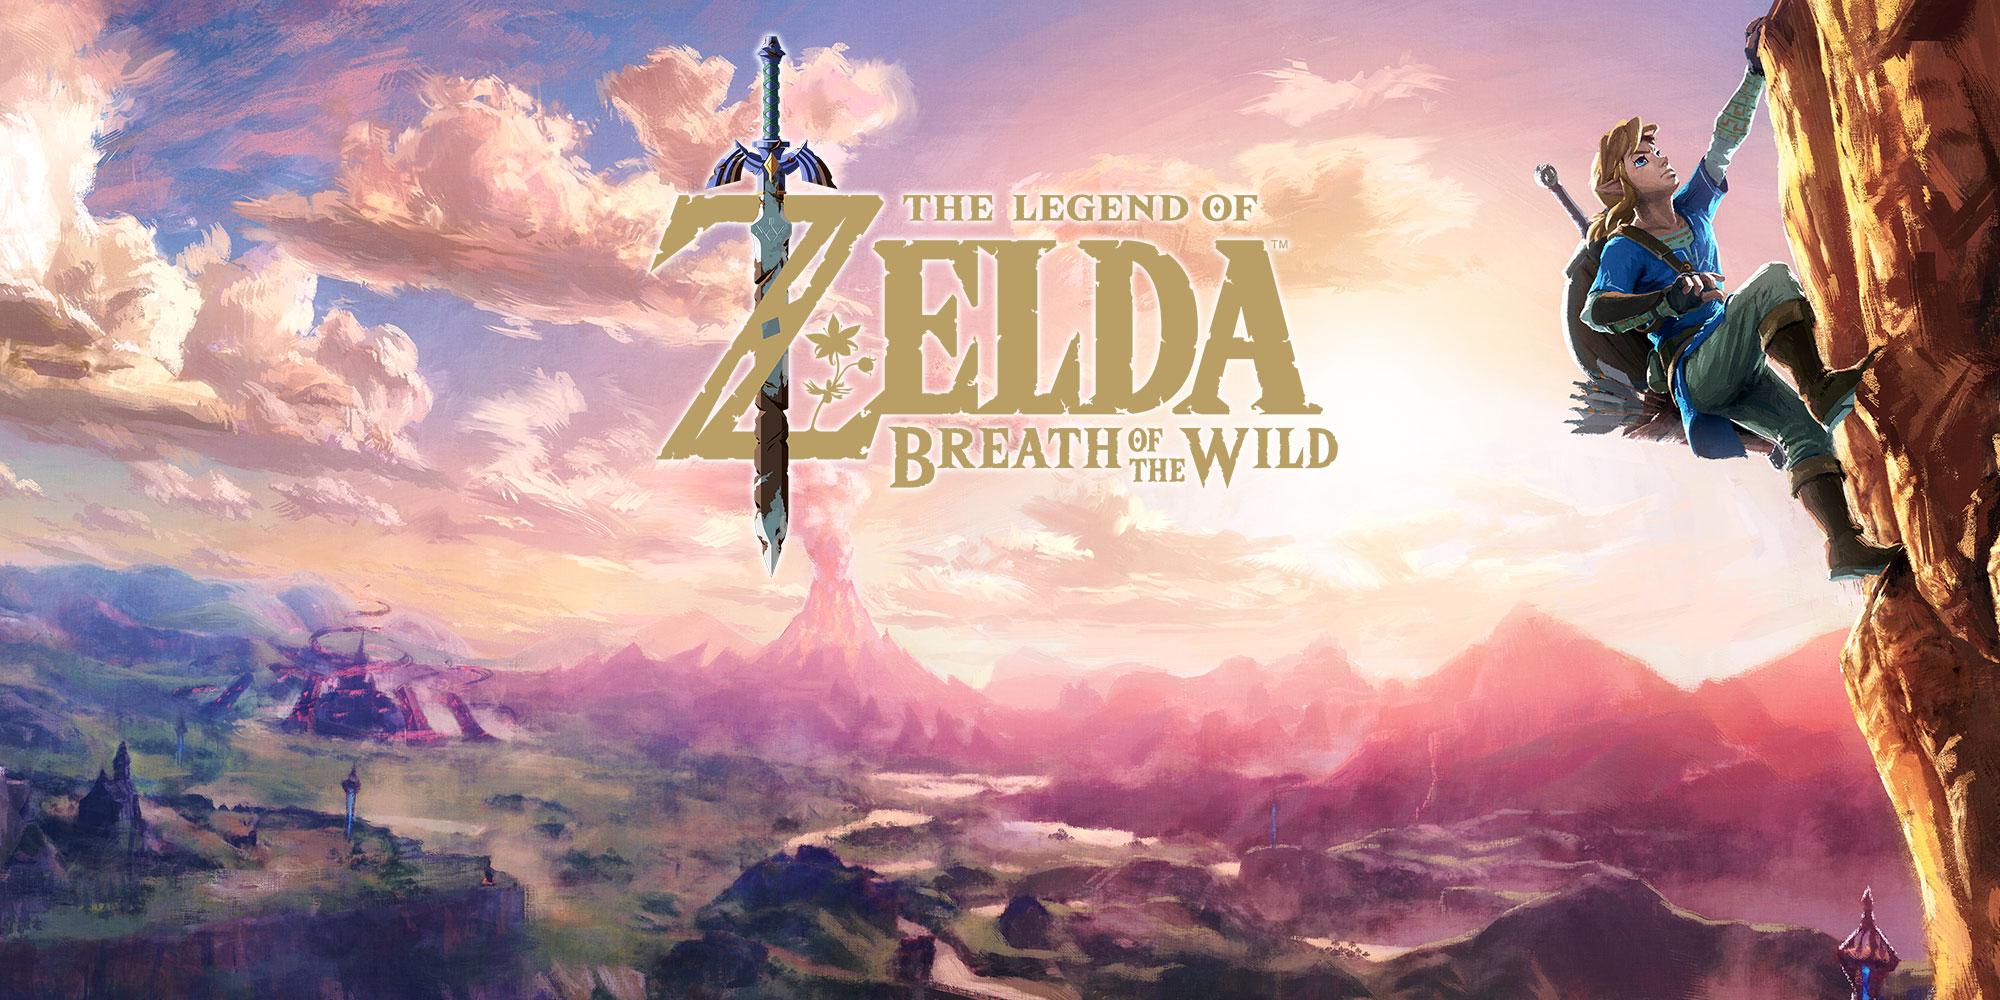 The Legend of Zelda: Breath of the Wild wins prestigious Game of